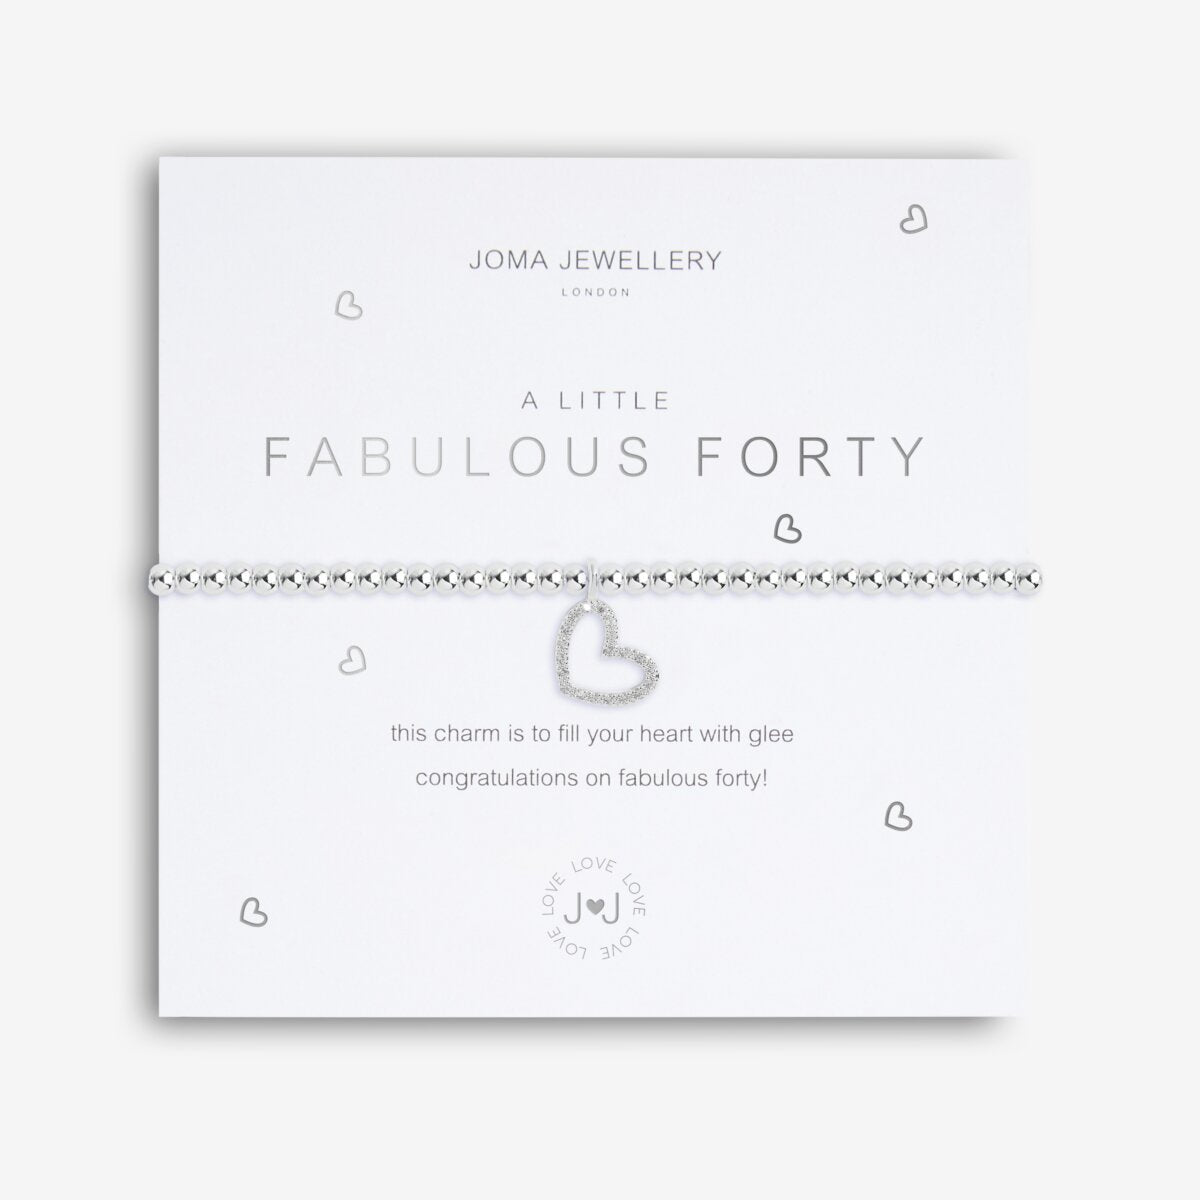 Joma Jewellery 'A Little' Fabulous Forty